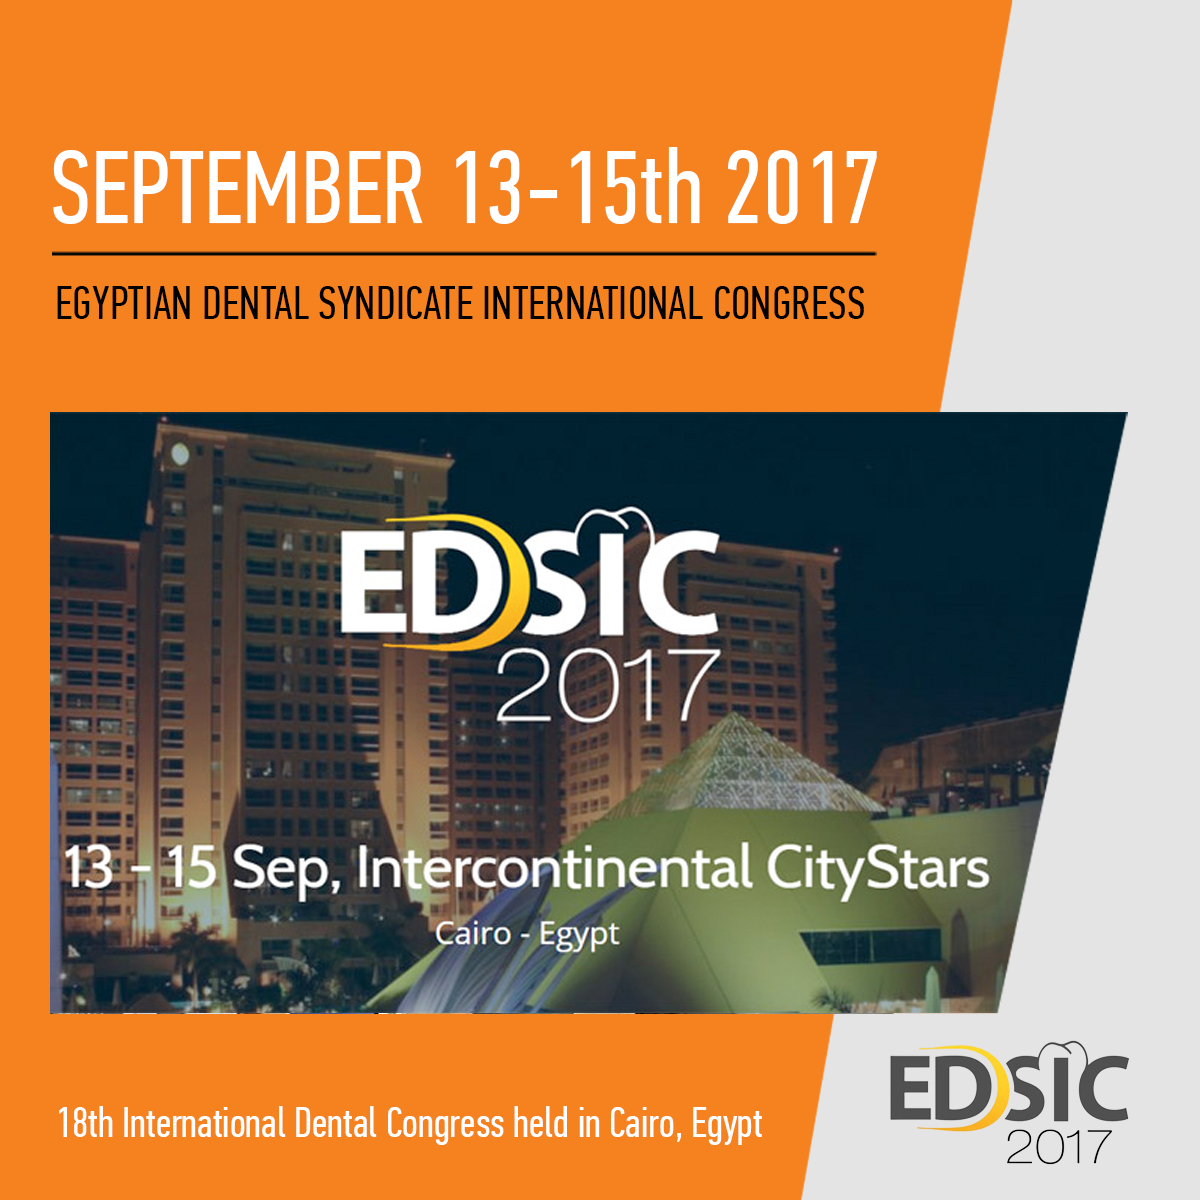 EDSIC 2017